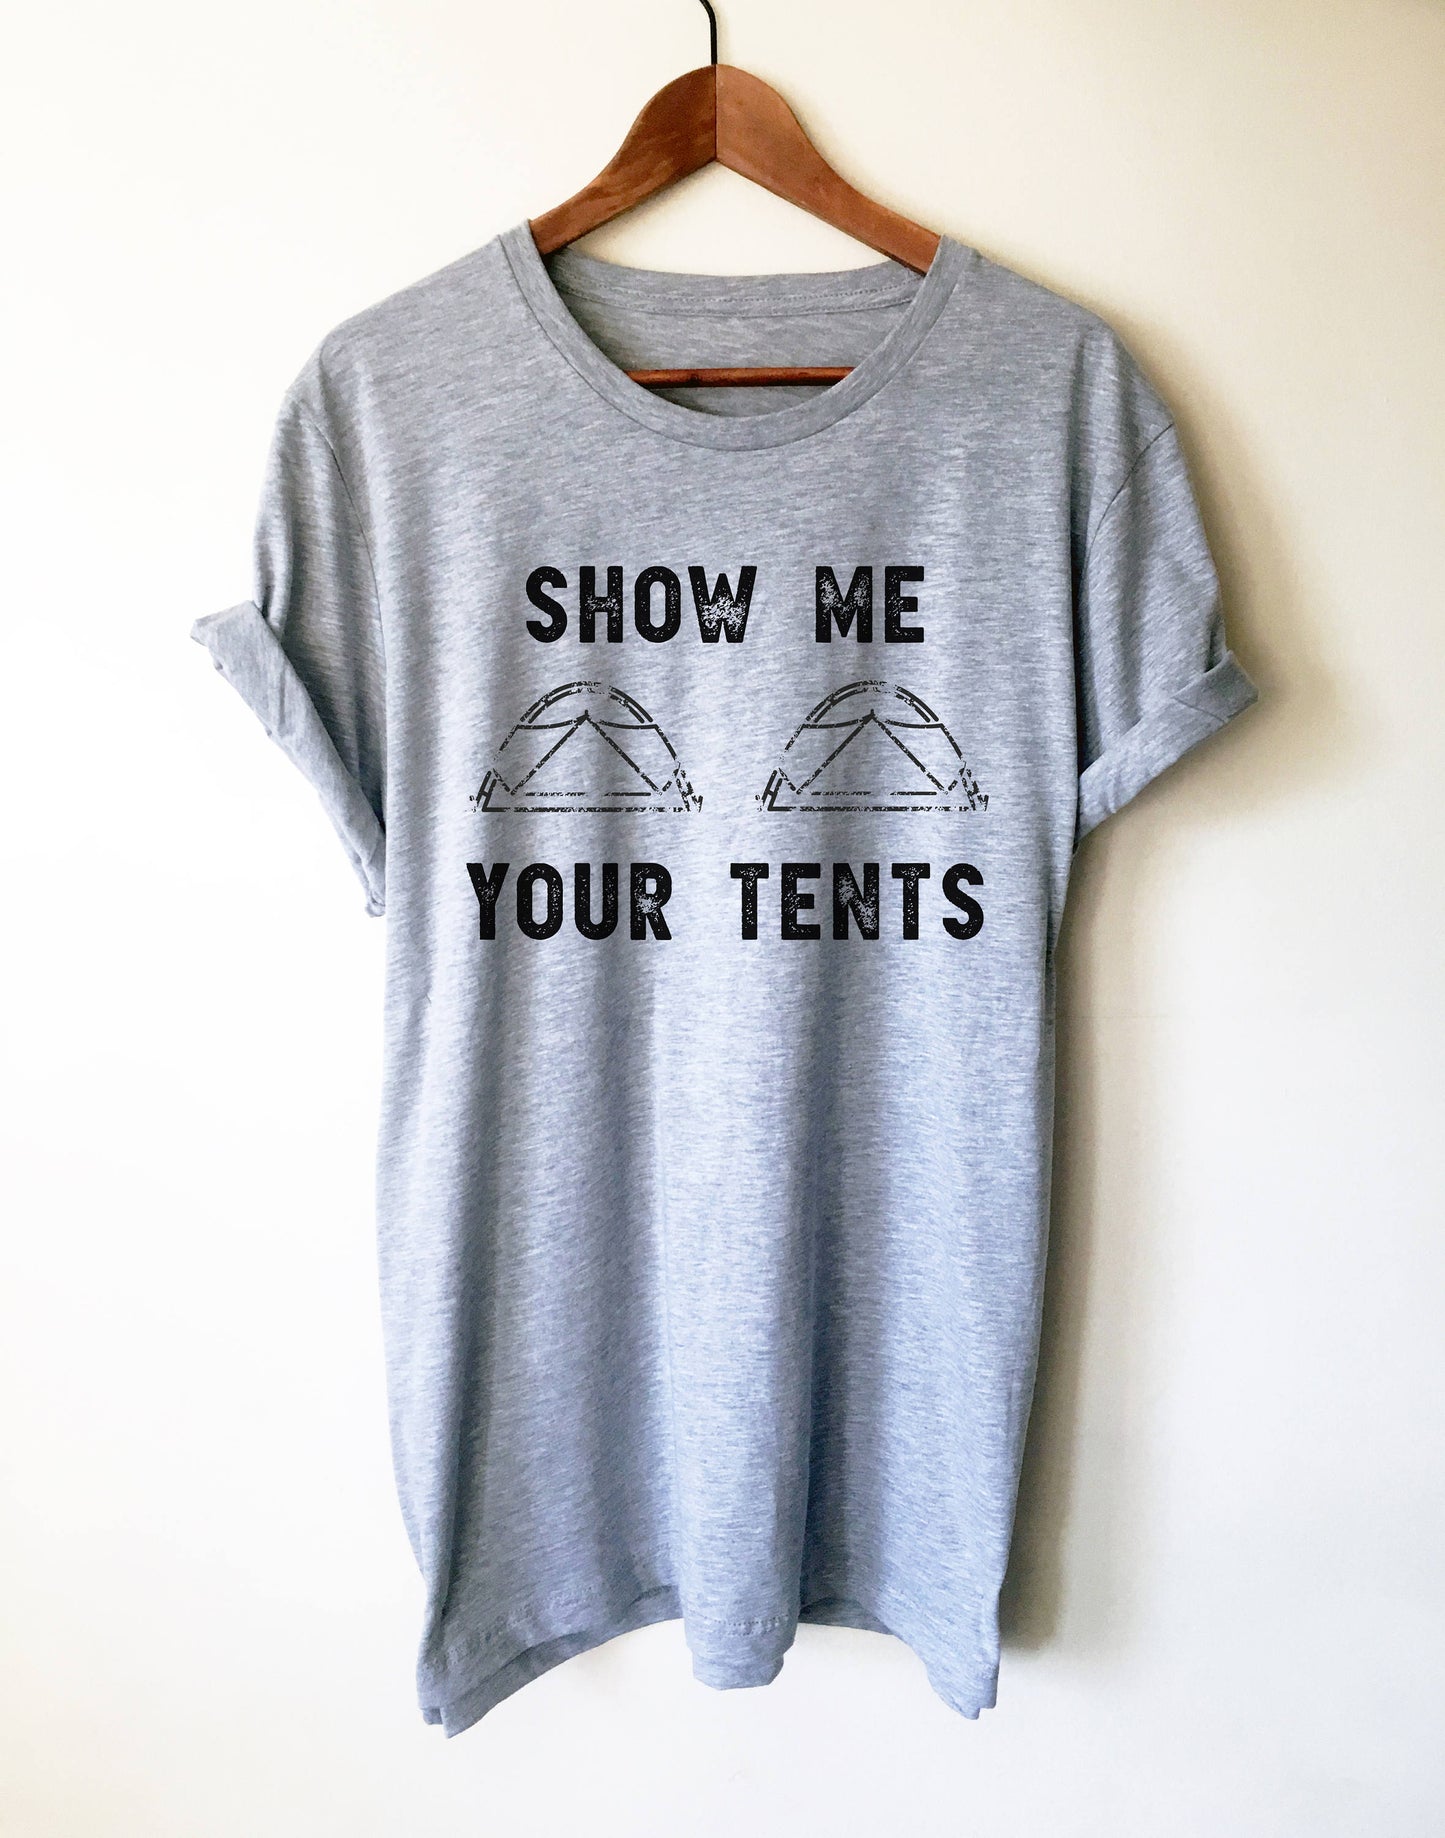 Show Me Your Tents Unisex Shirt | Camping shirt | Camping gift | Camping shirts | Nature lover gift | Tent shirt | Adventure shirt